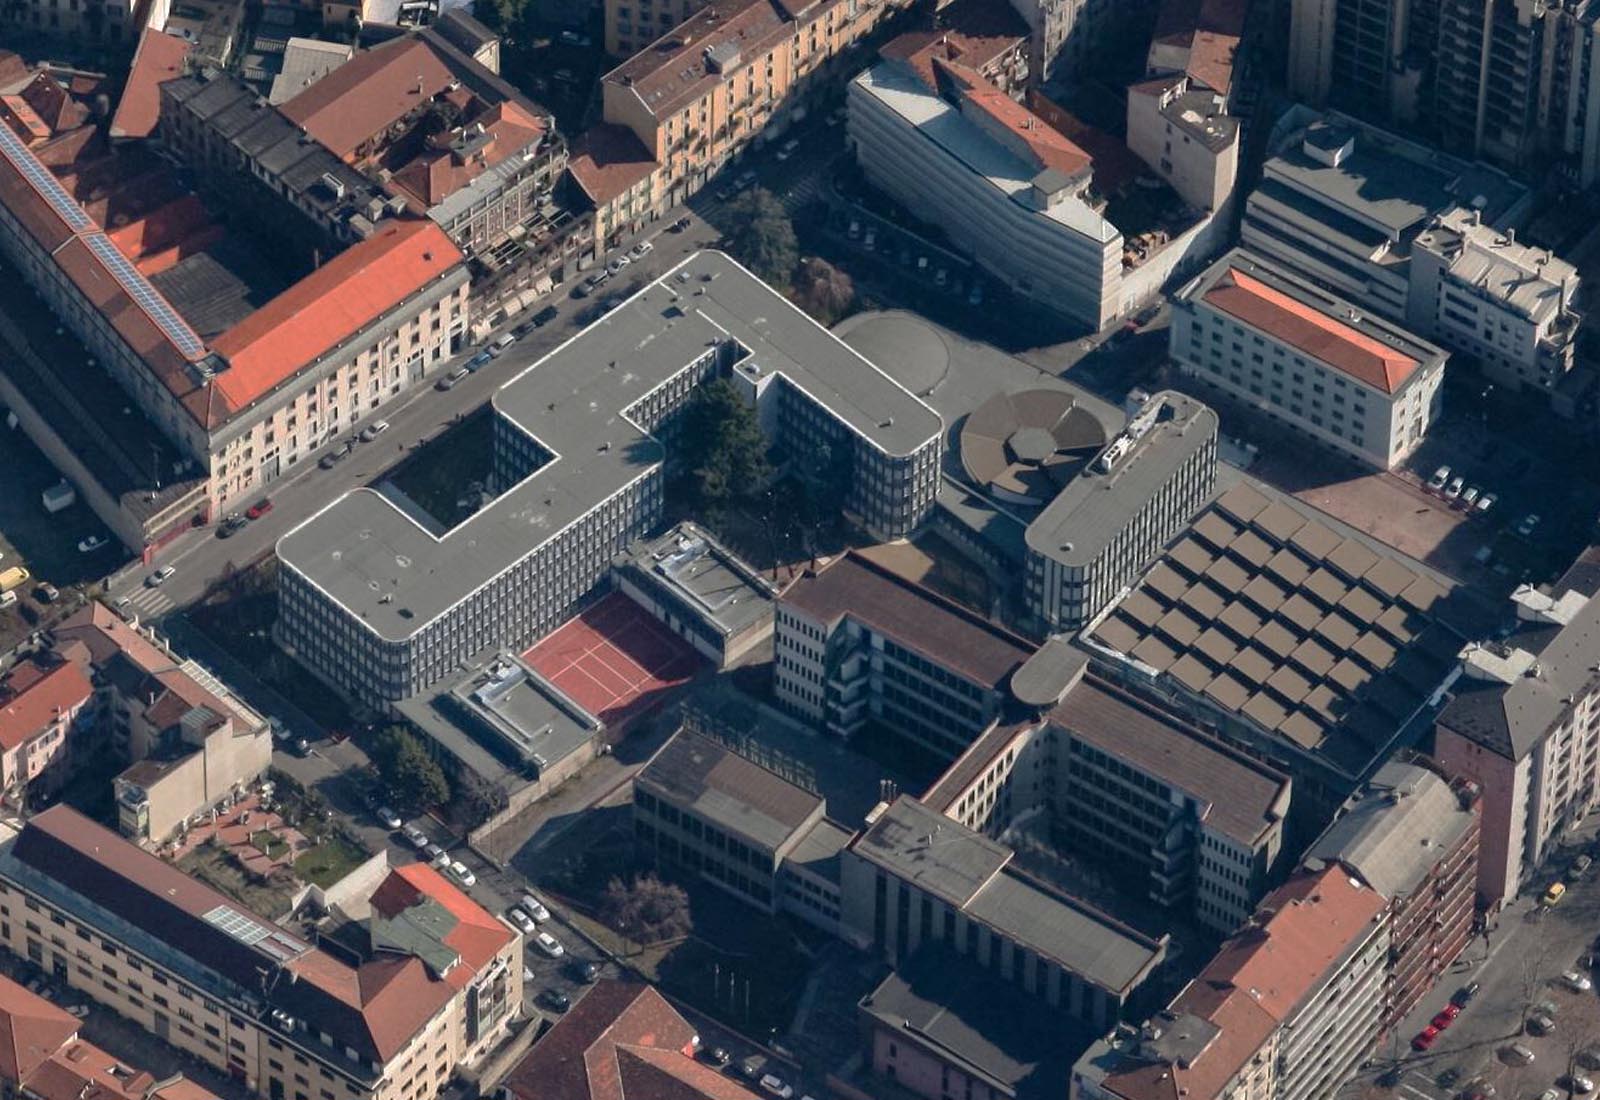 Manzoni school center in Milan - Aerial view of the school ensemble